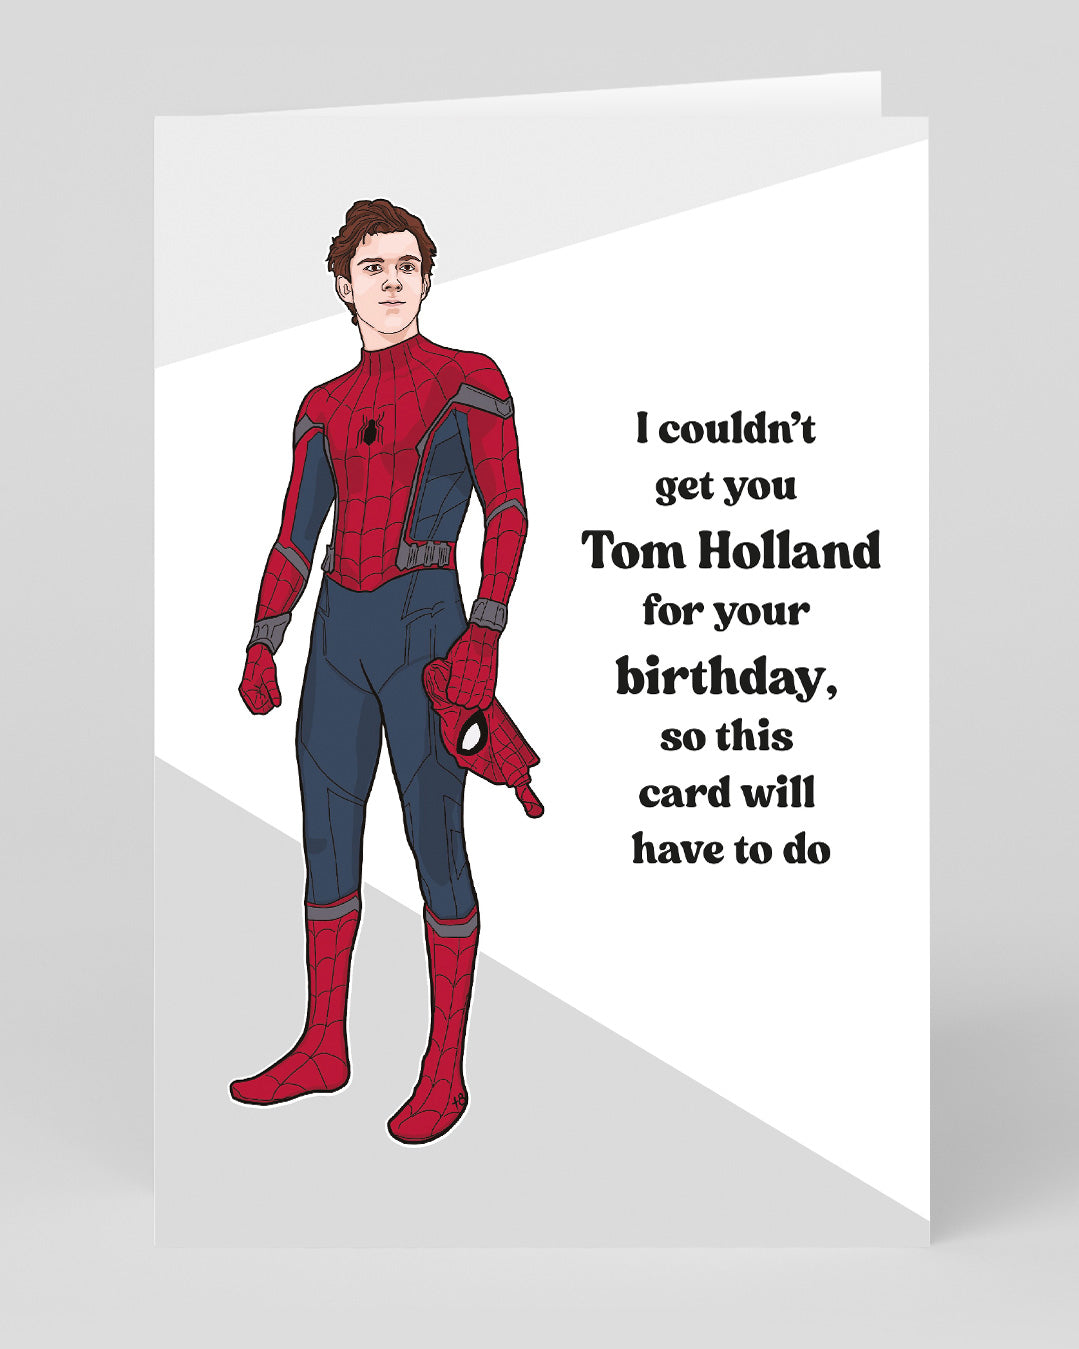 Funny Birthday Card Couldn’t Get Tom Holland Birthday Card